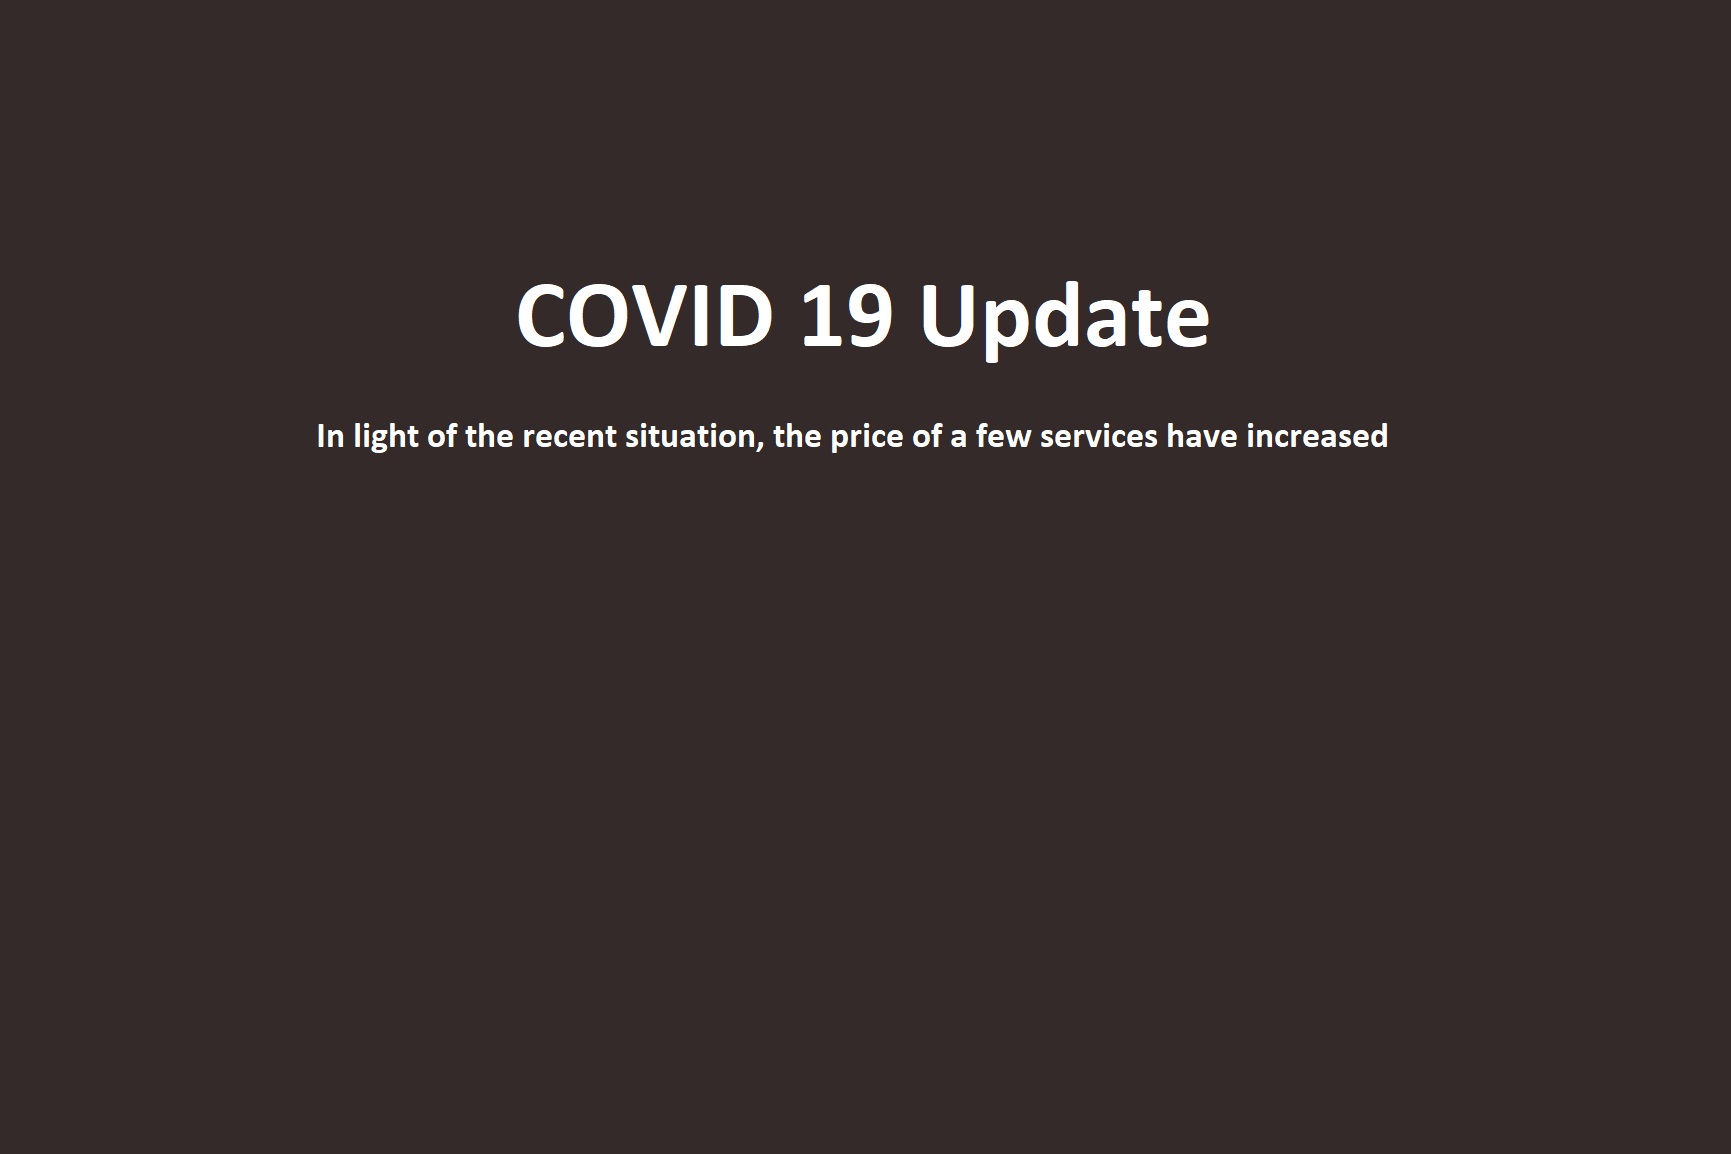 COVID19 price update